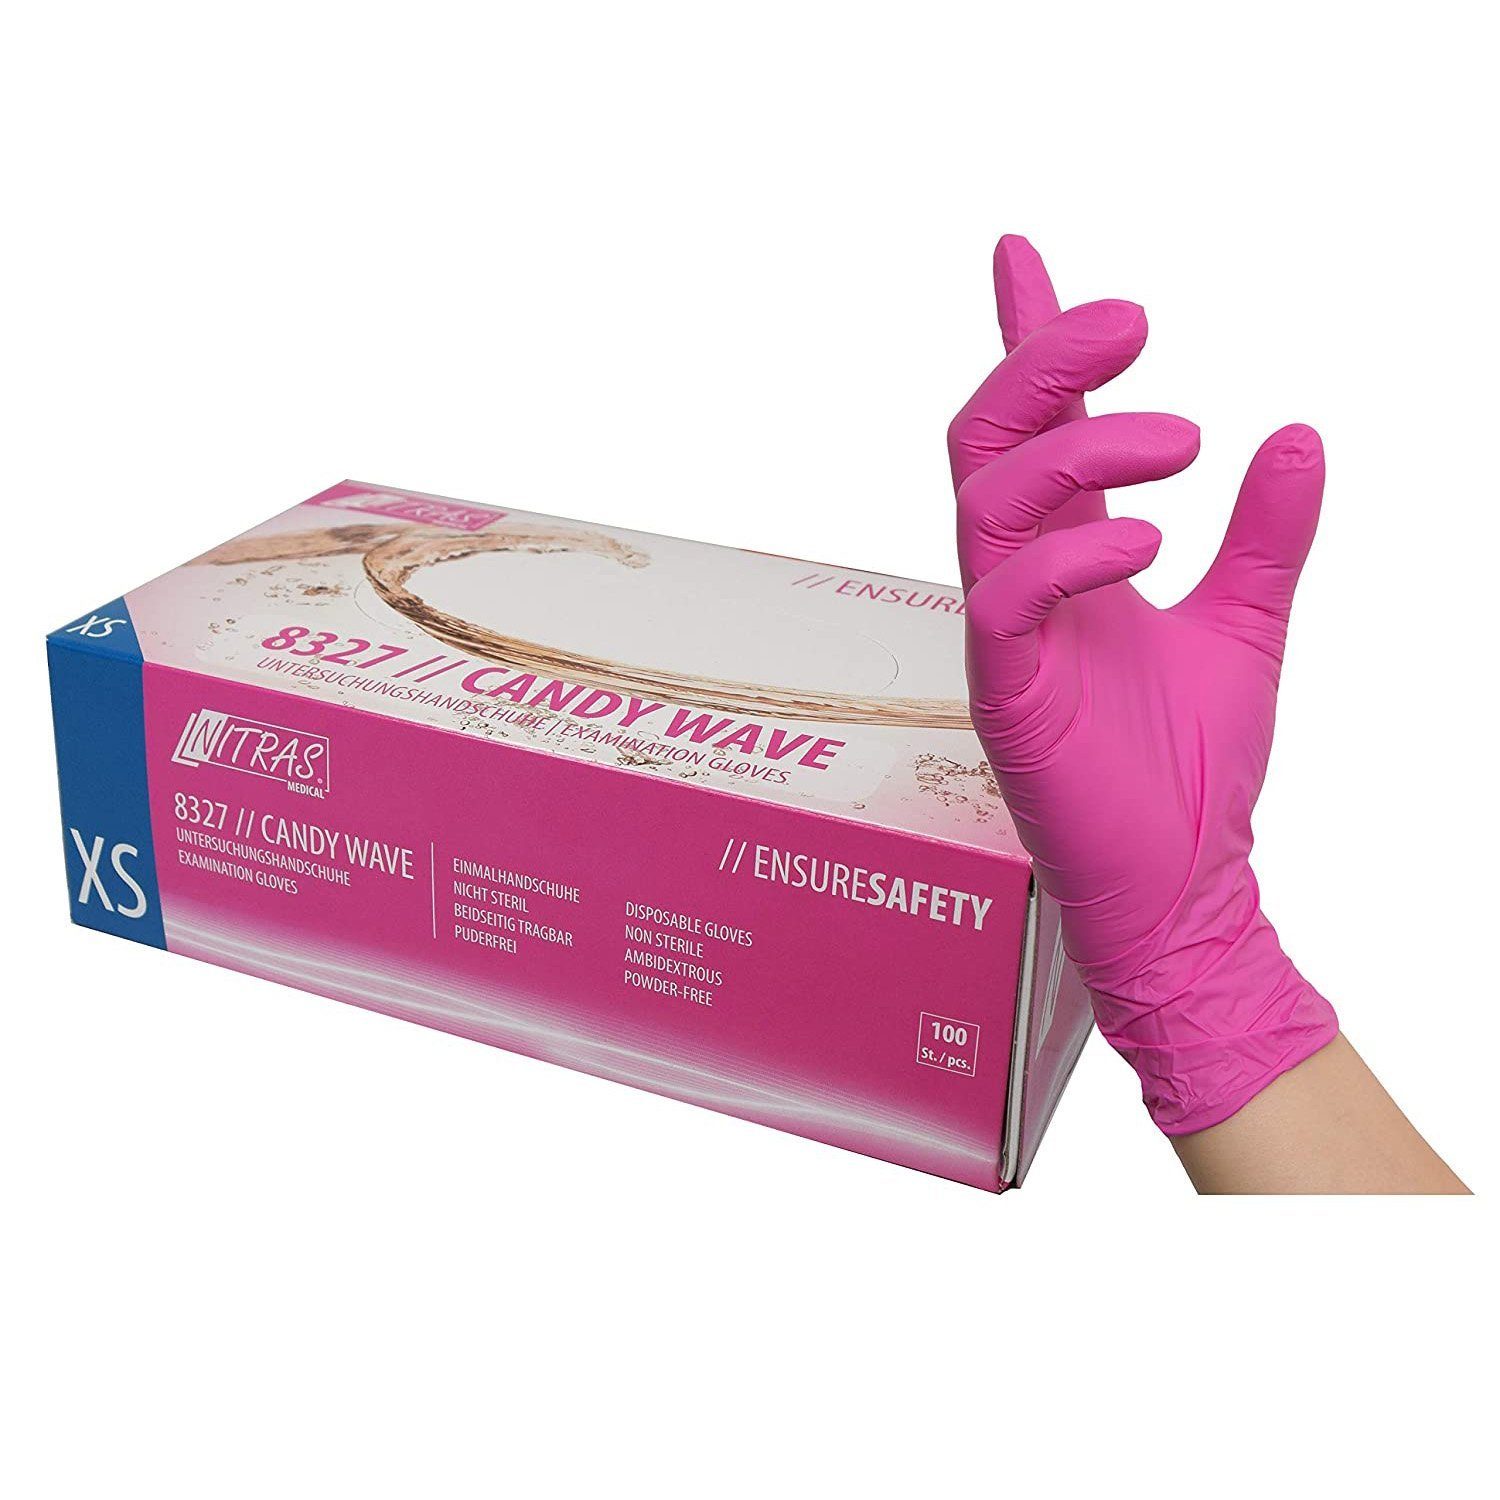 Angebotspreis Nitras Einweghandschuhe Candy Wave in Spender-Box – Nitril-Handschuhe pude